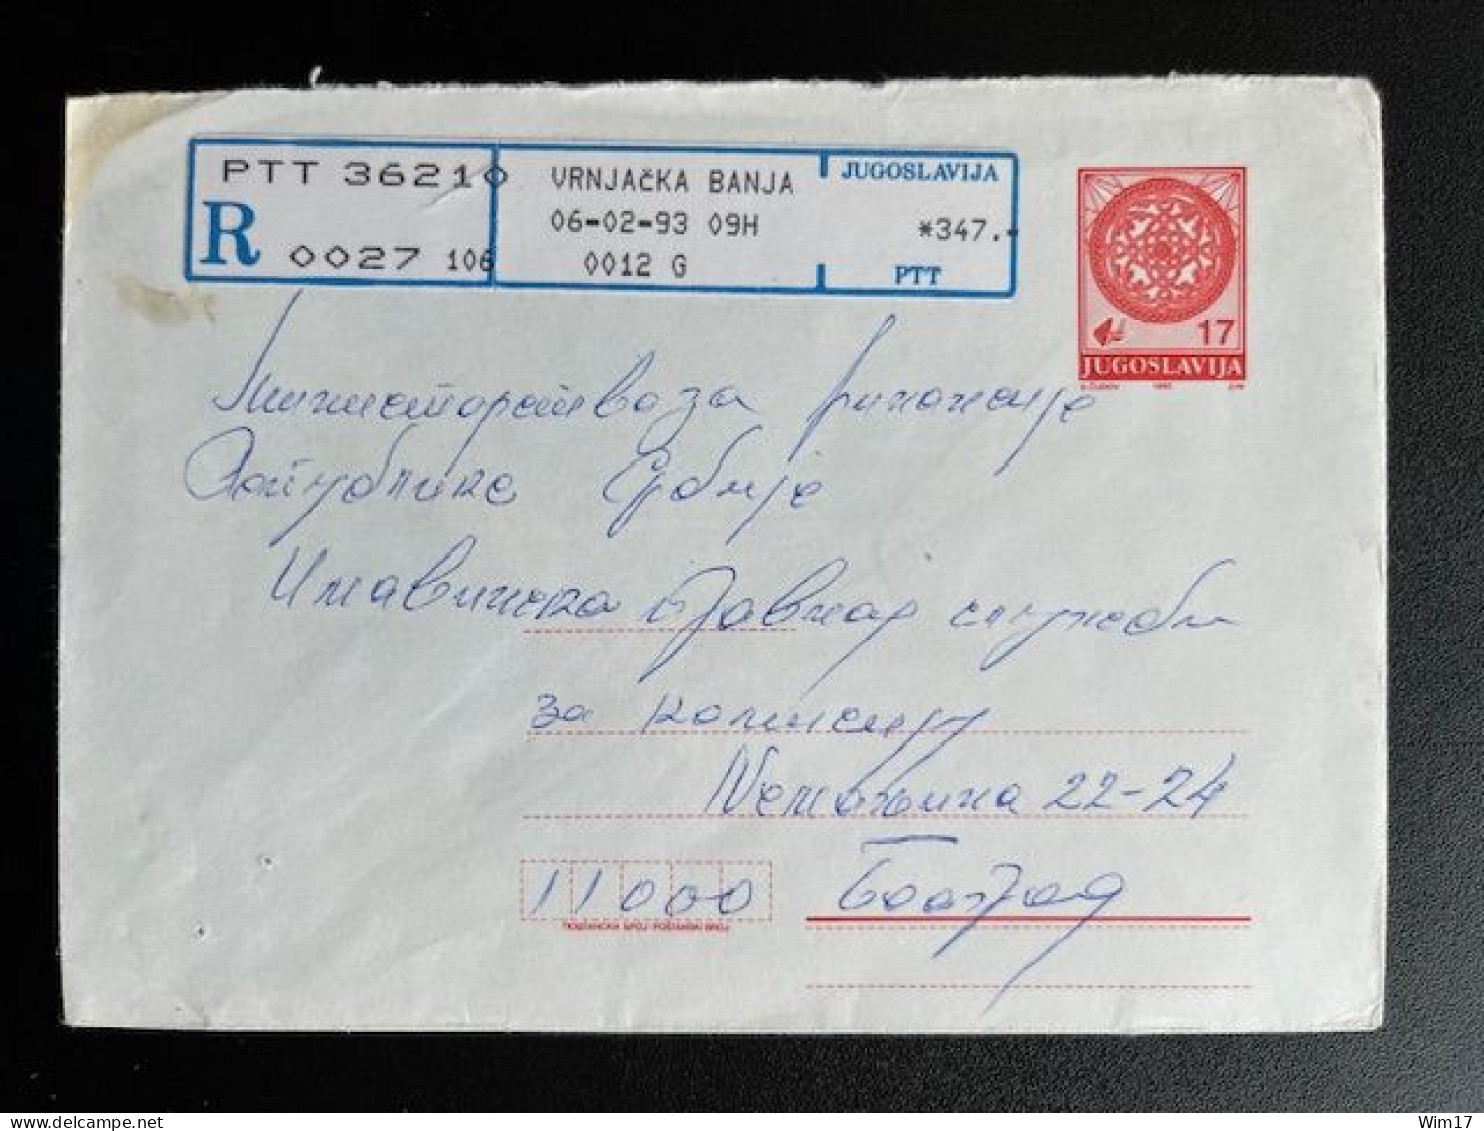 JUGOSLAVIJA YUGOSLAVIA 1993 REGISTERED LETTER VRNJACKA BANJA TO BELGRADE BEOGRAD 06-02-1993 - Lettres & Documents